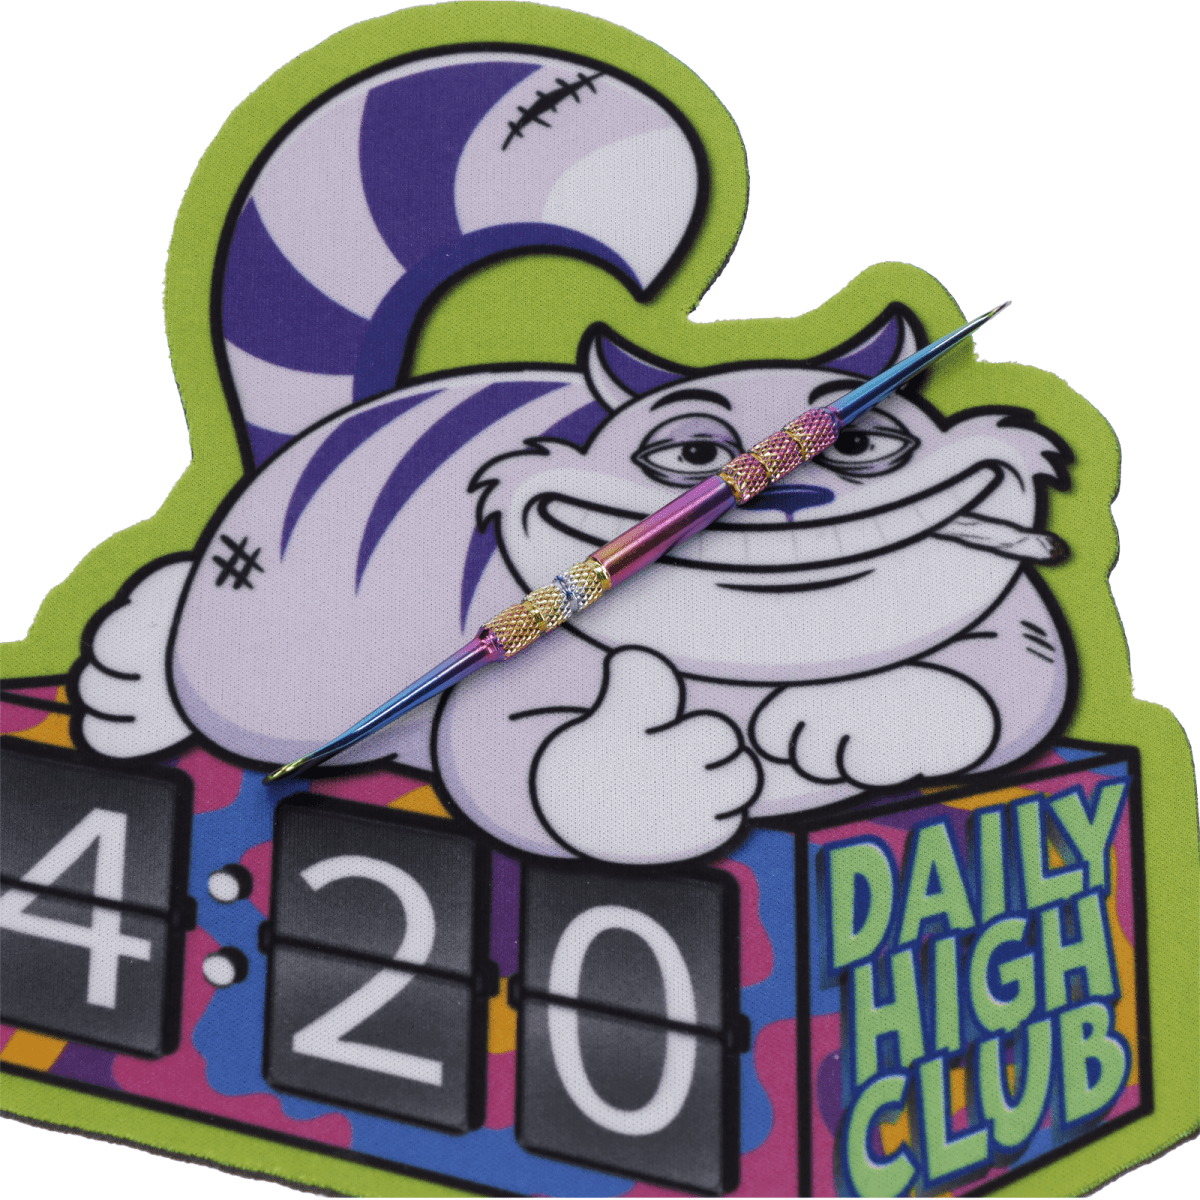 Daily High Club subscription box "420 Bunny" Smoking Box